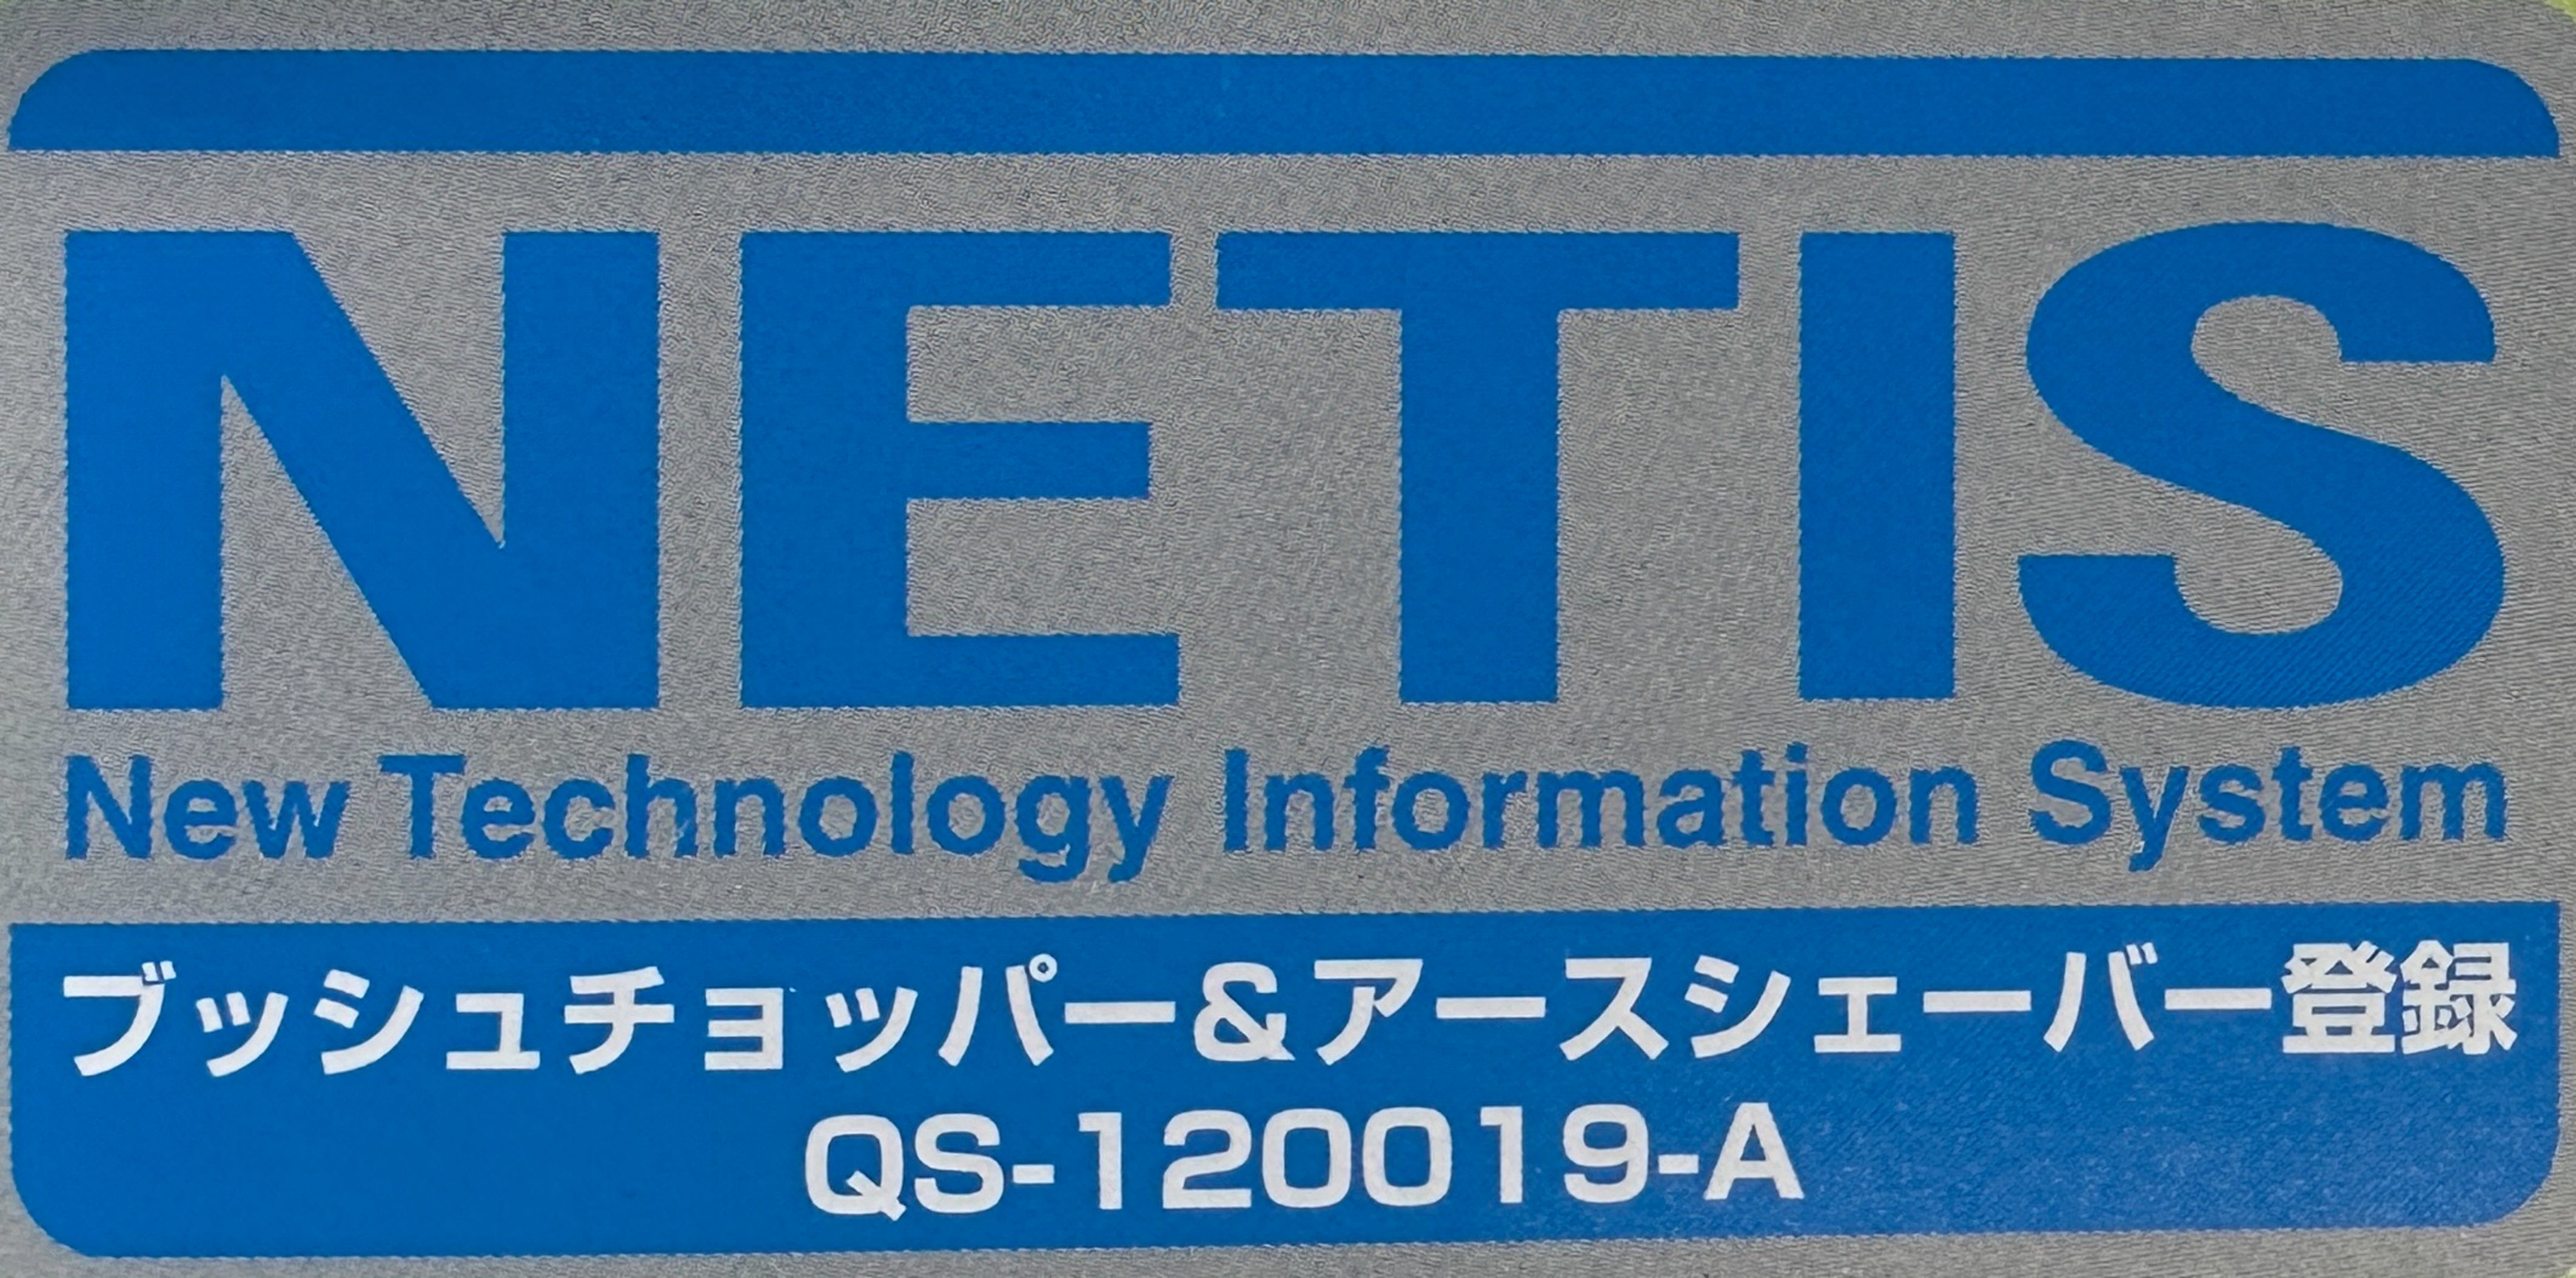 NETIS建新技術情報提供システム